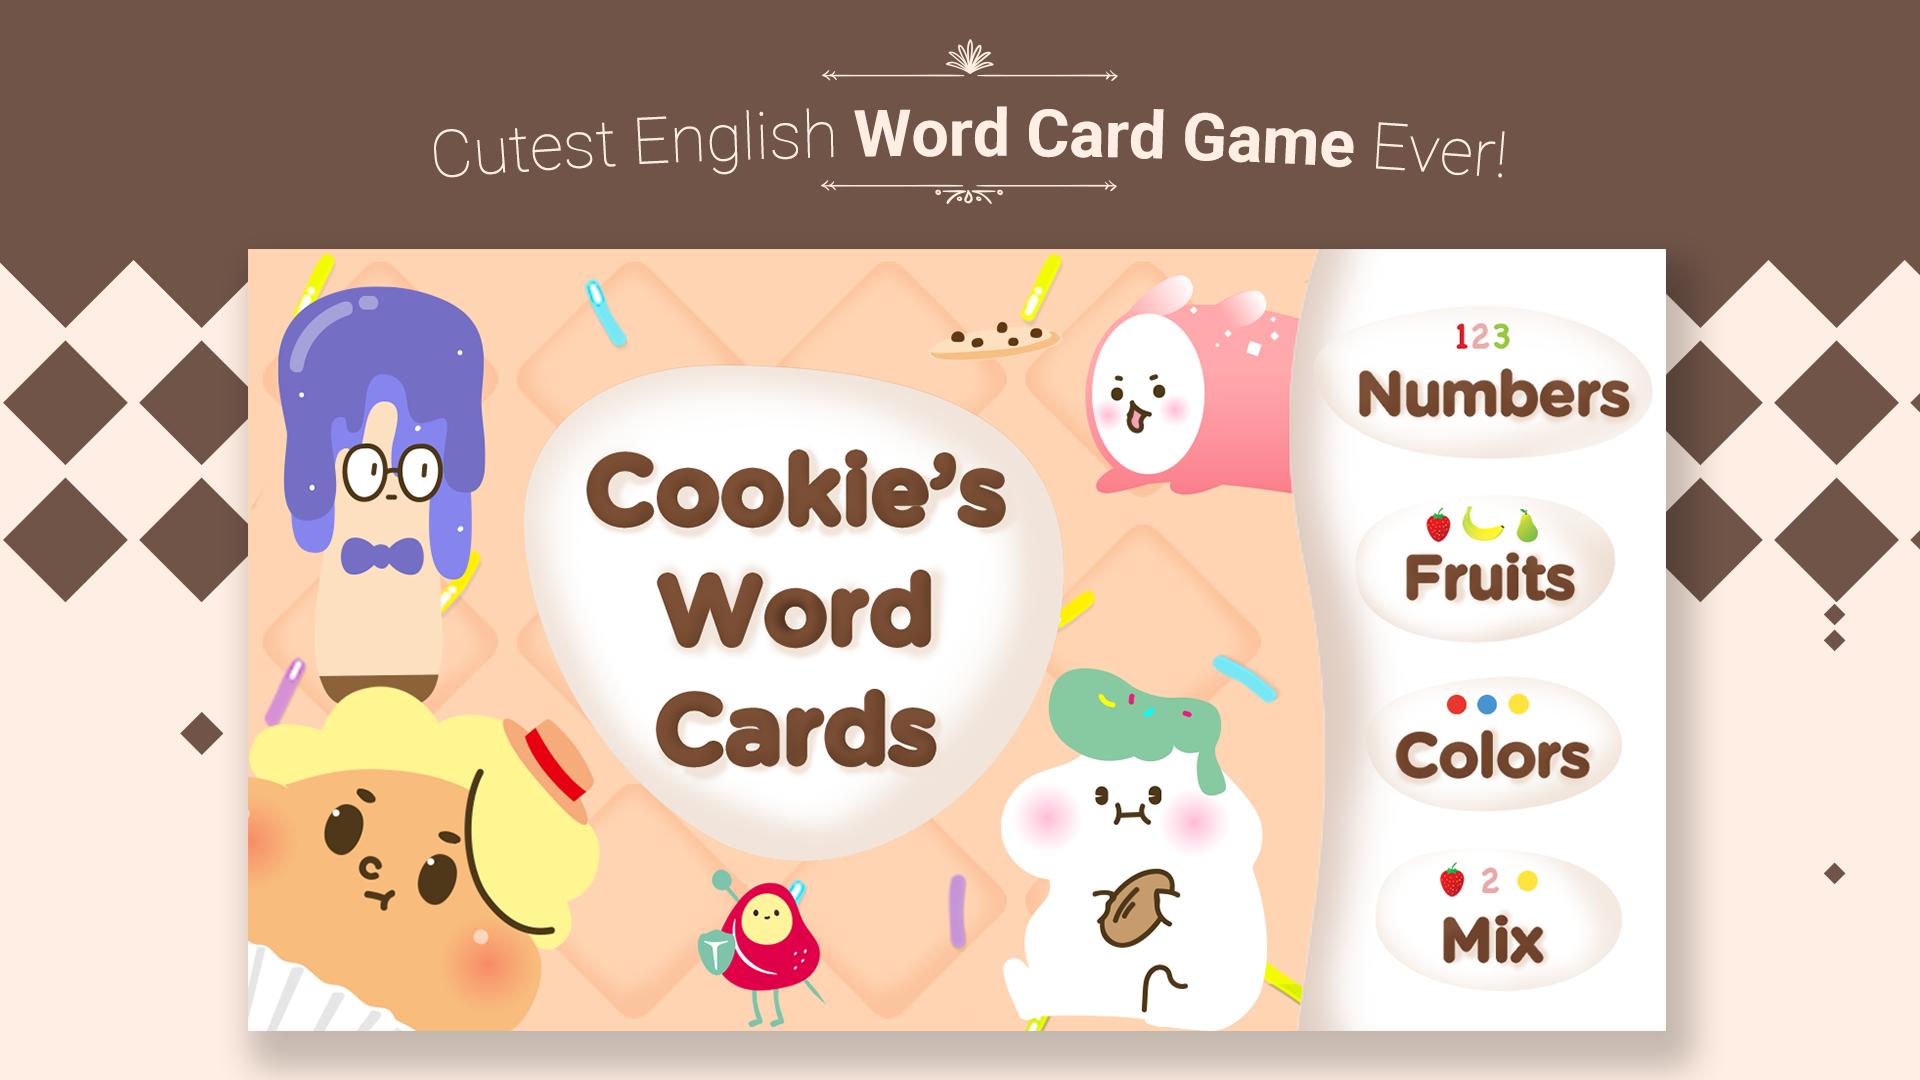 English cute Words. English Card games. Cookie Cards. Cute на английском. Английское слово cute